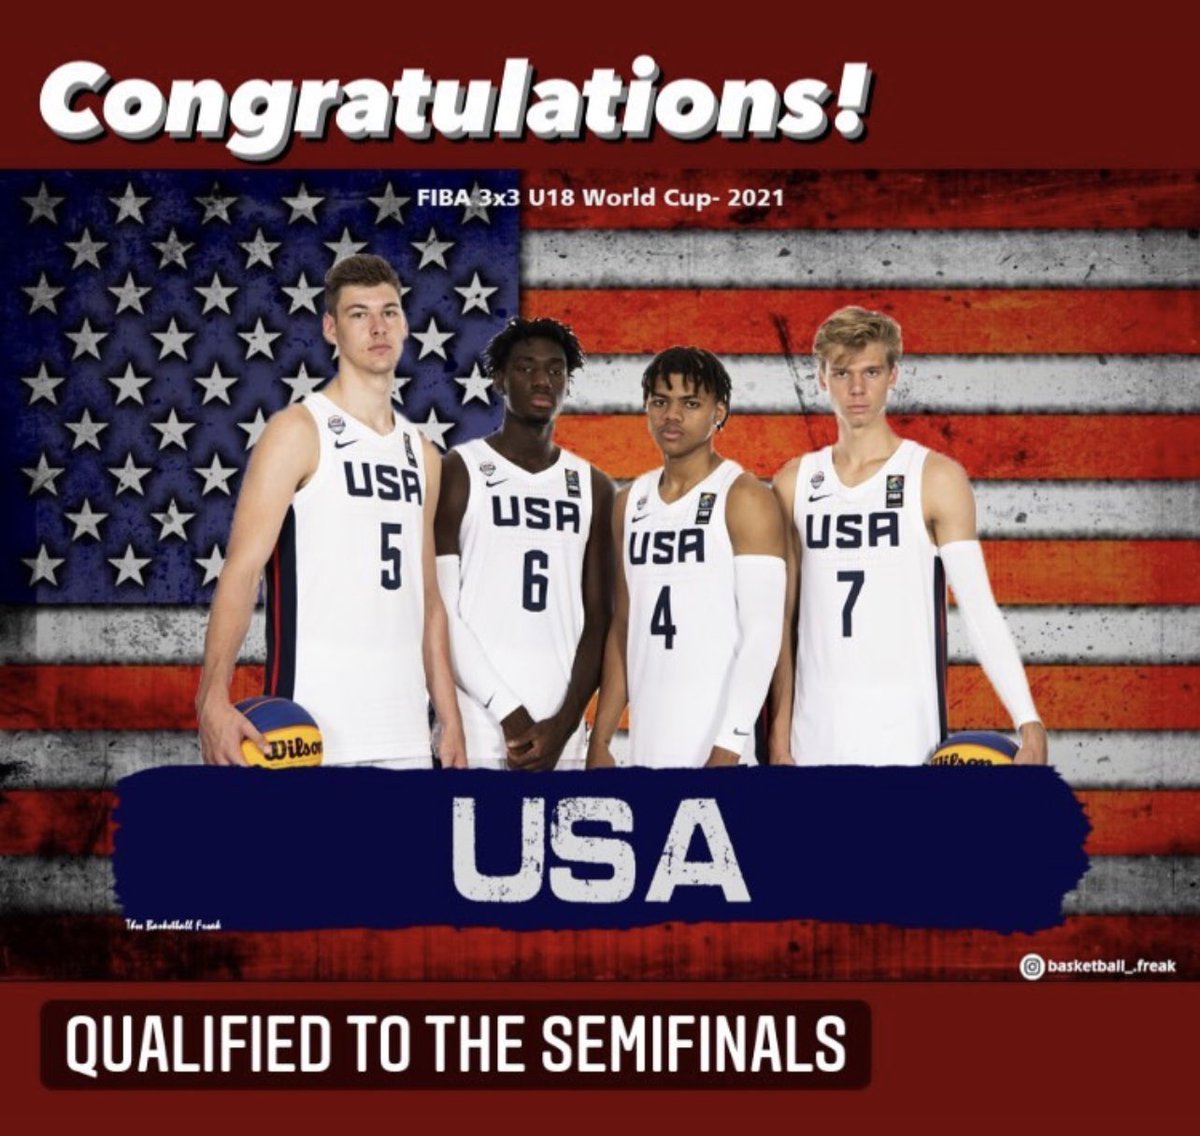 #3x3U18 Men's World Cup semi-finals Sunday! 

5:05 am CST - 🇧🇾Belarus vs USA 🇺🇸

#Goingforgold

Tune in on YouTube.com/FIBA3x3